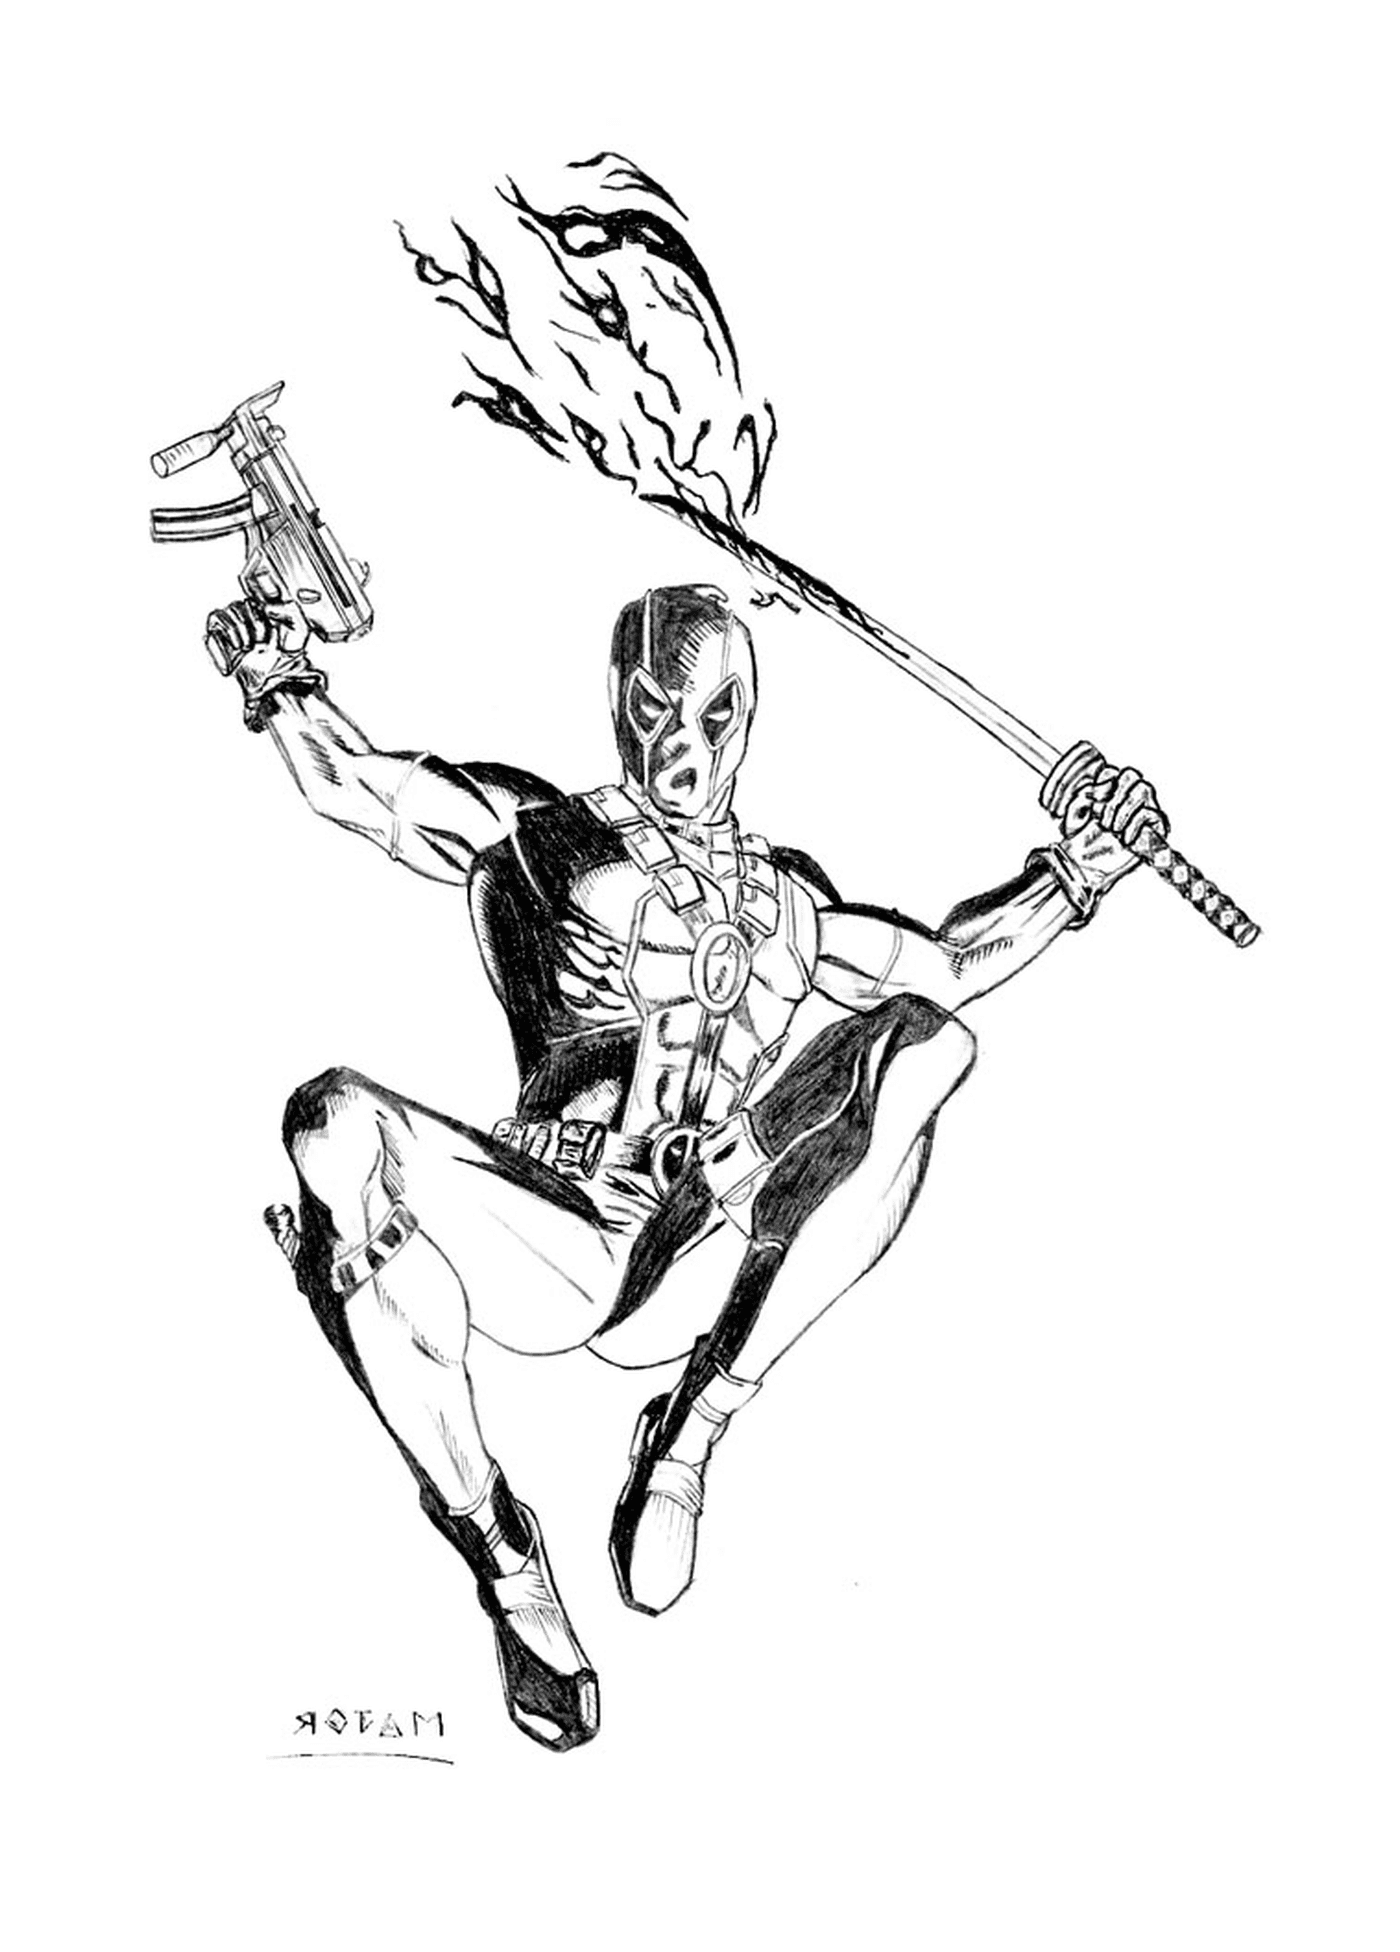  Deadpool holding a rifle and a sword 